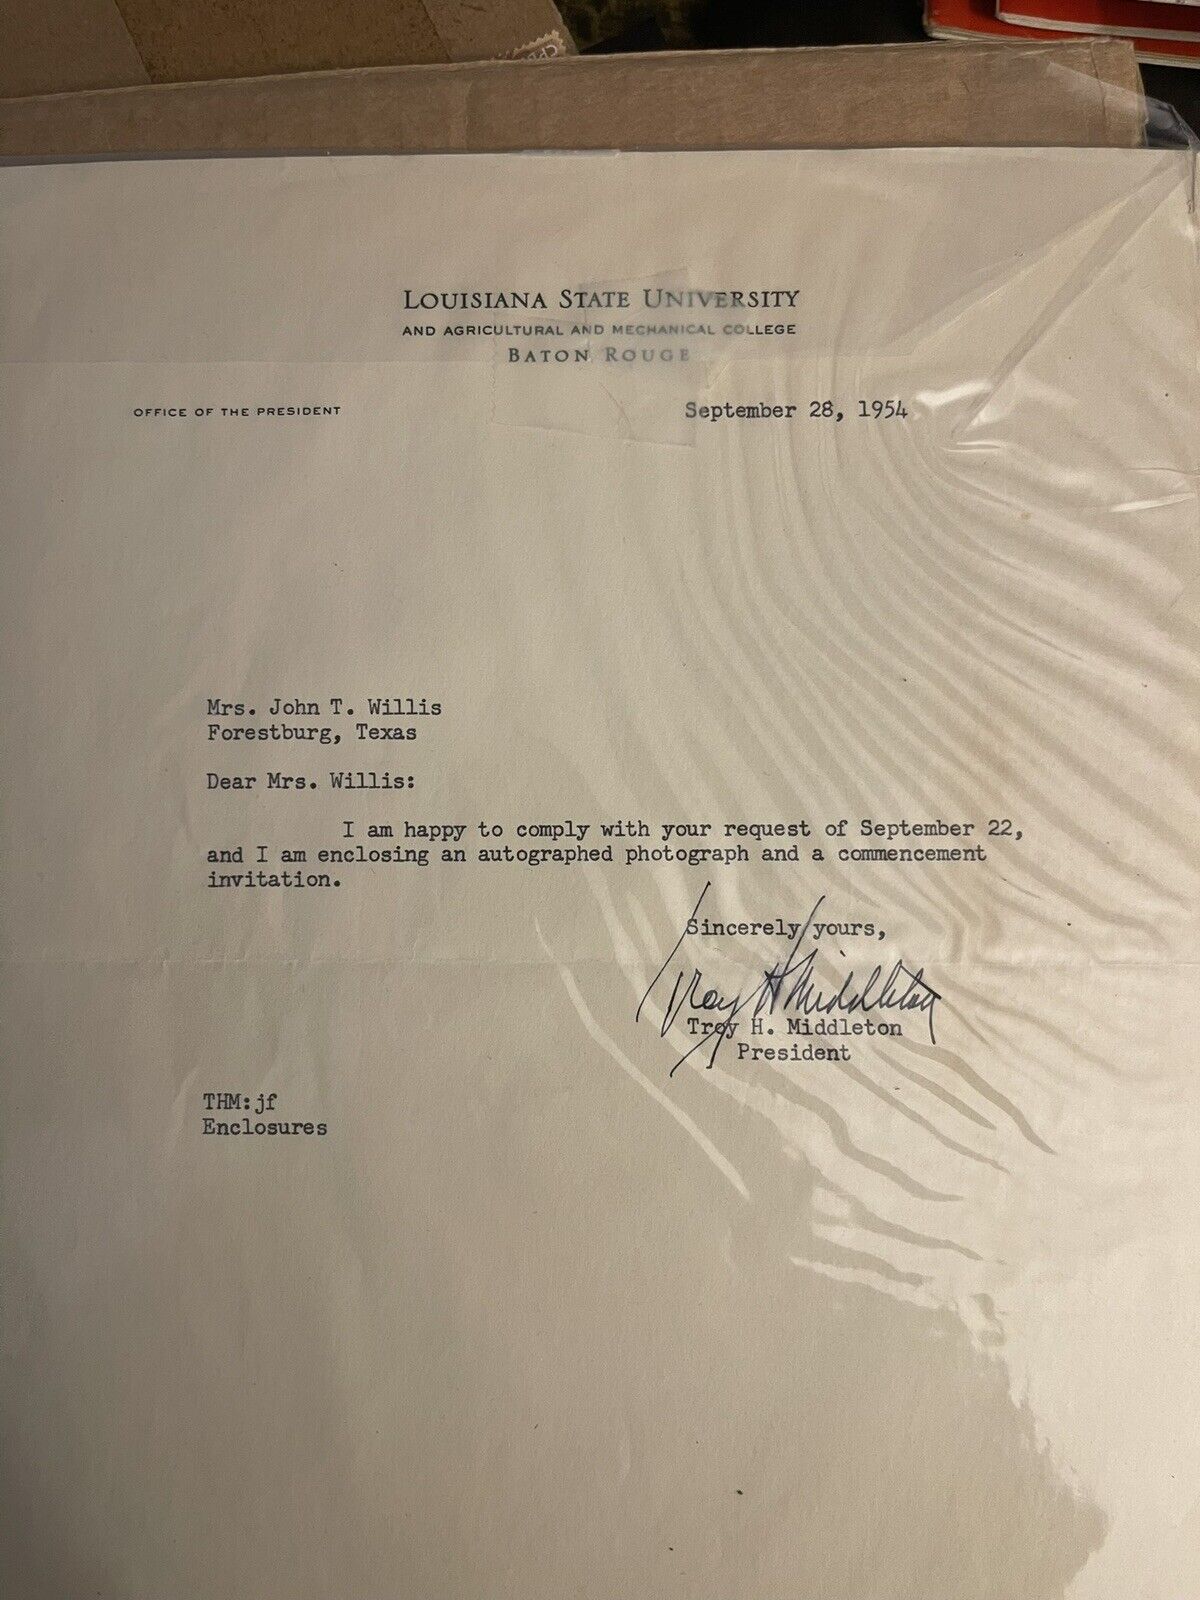 WWII Battle Of The Bulge Gen/LSU President Troy Middleton Letter Signature